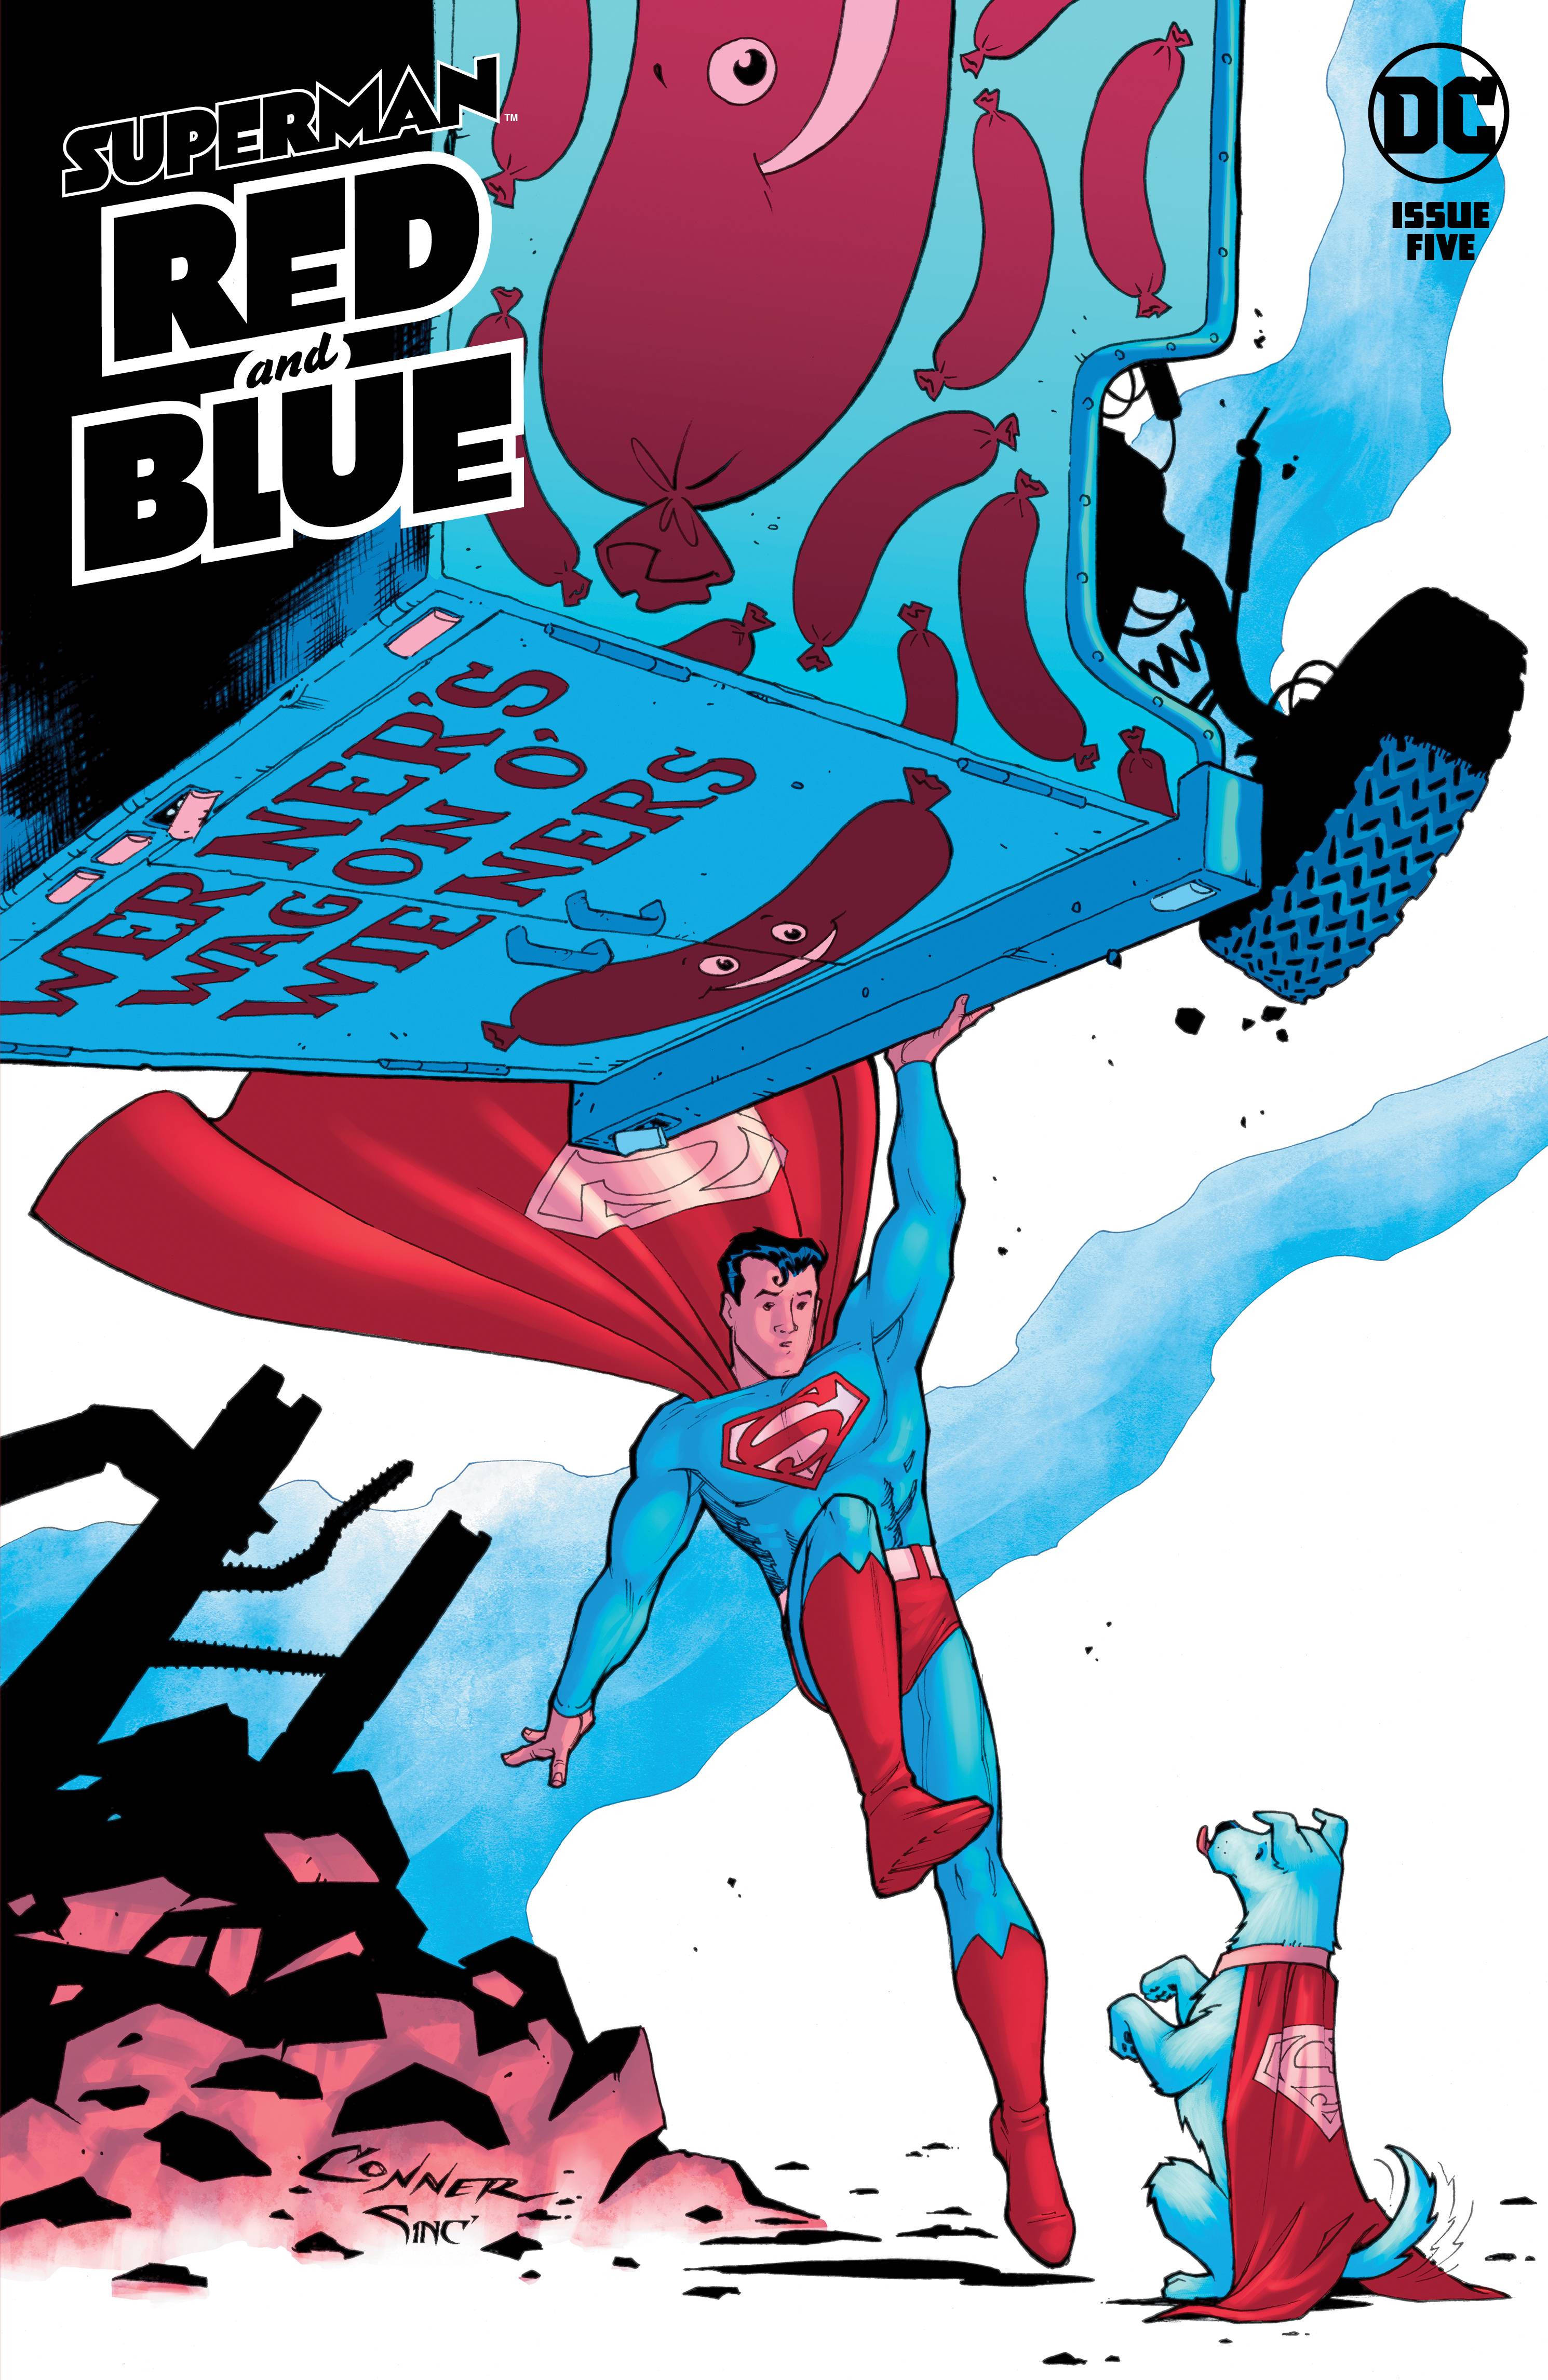 SUPERMAN RED & BLUE #5 CVR A CONNER